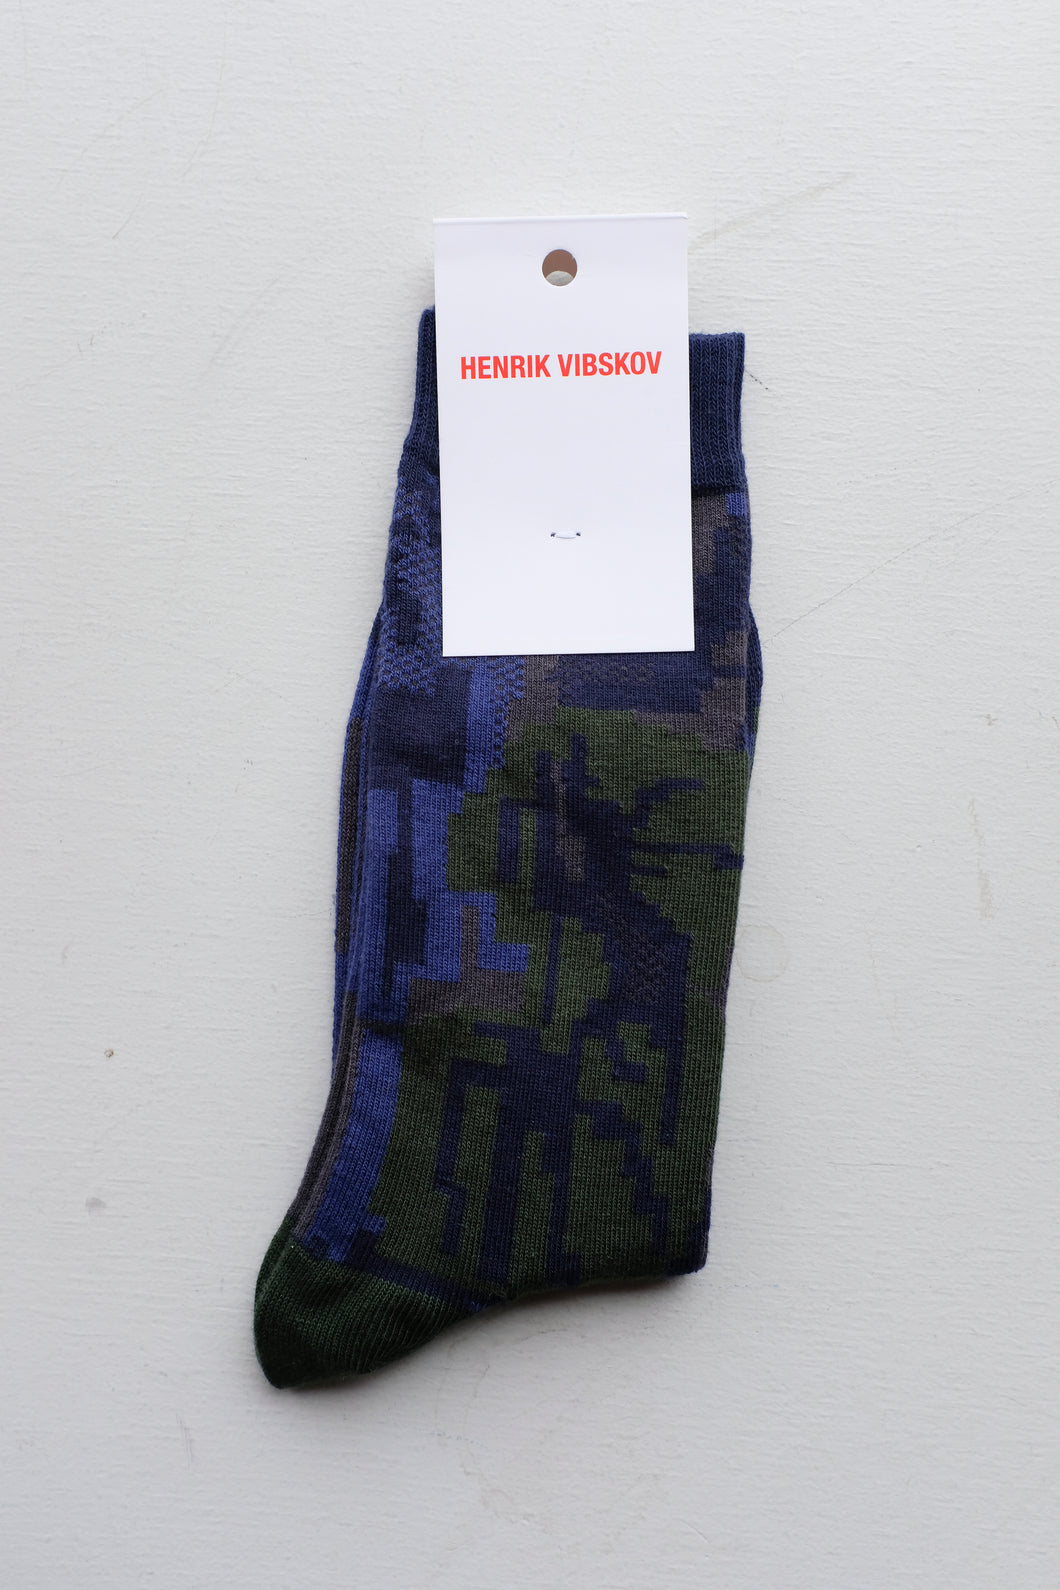 Henrik Vibskov - Pixelated Tomato Socks (40-45) - front